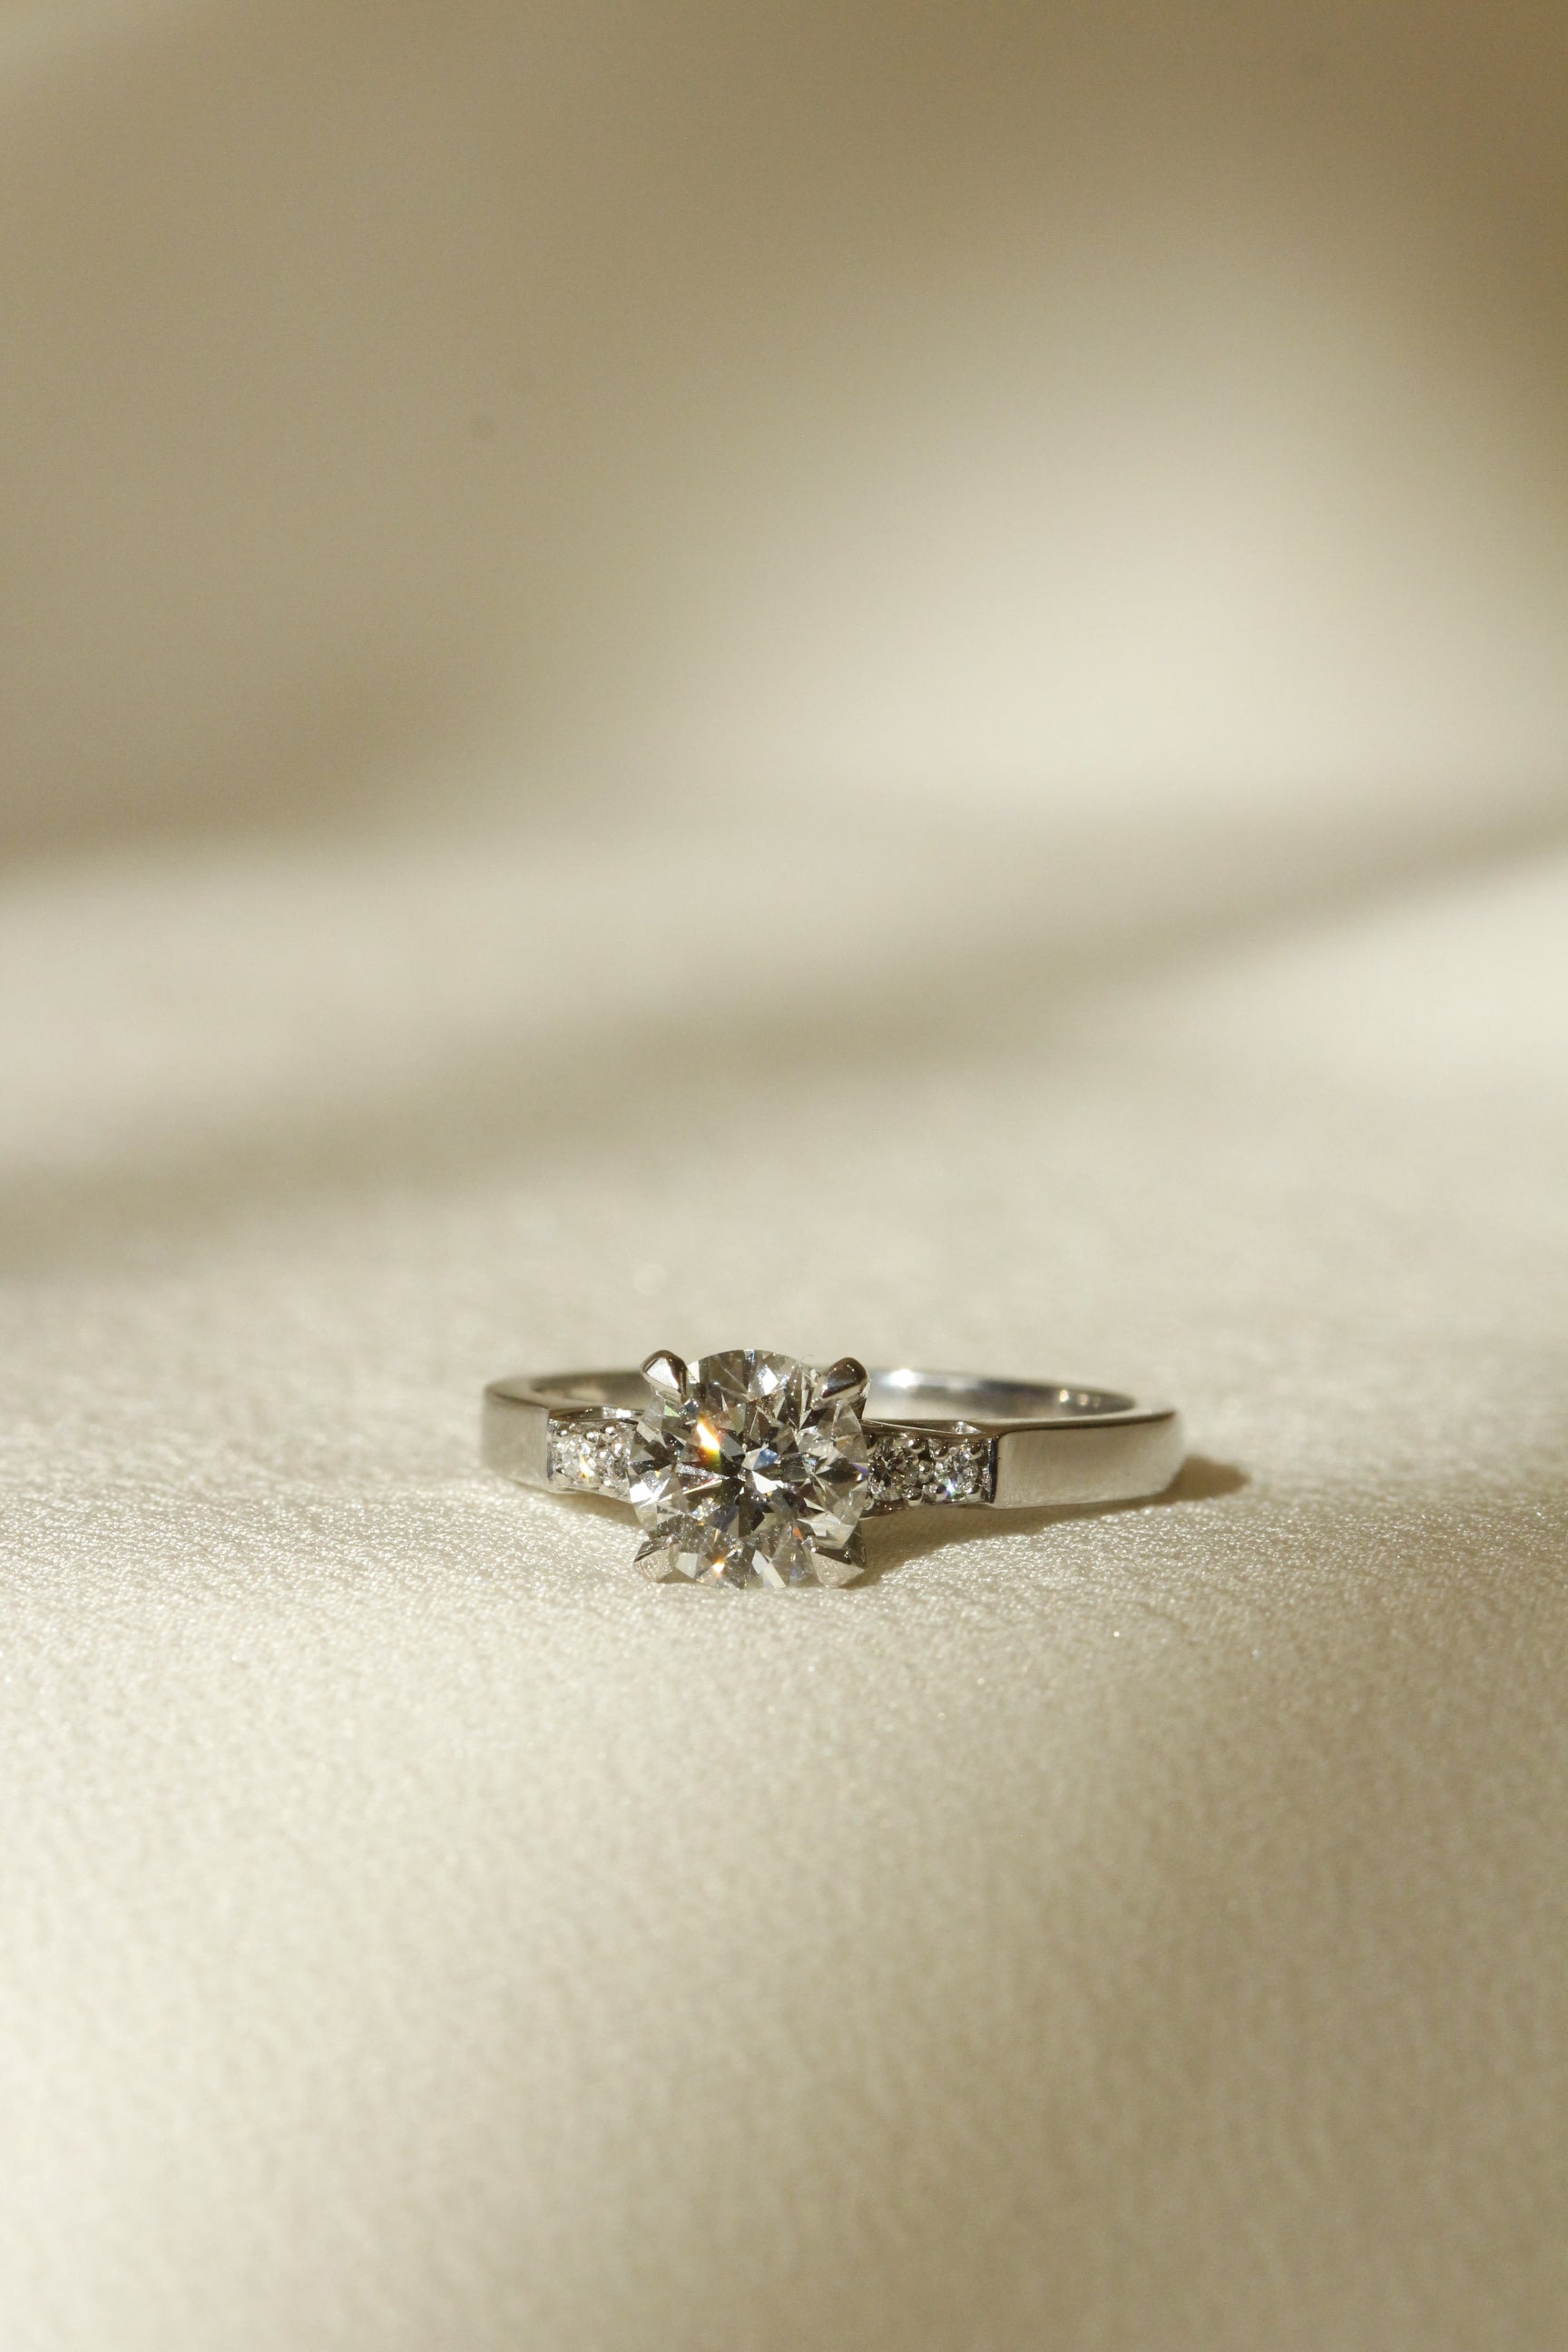 Round diamond with diamonds on band engagement ring Galvani design image of ring on white silk cloth 